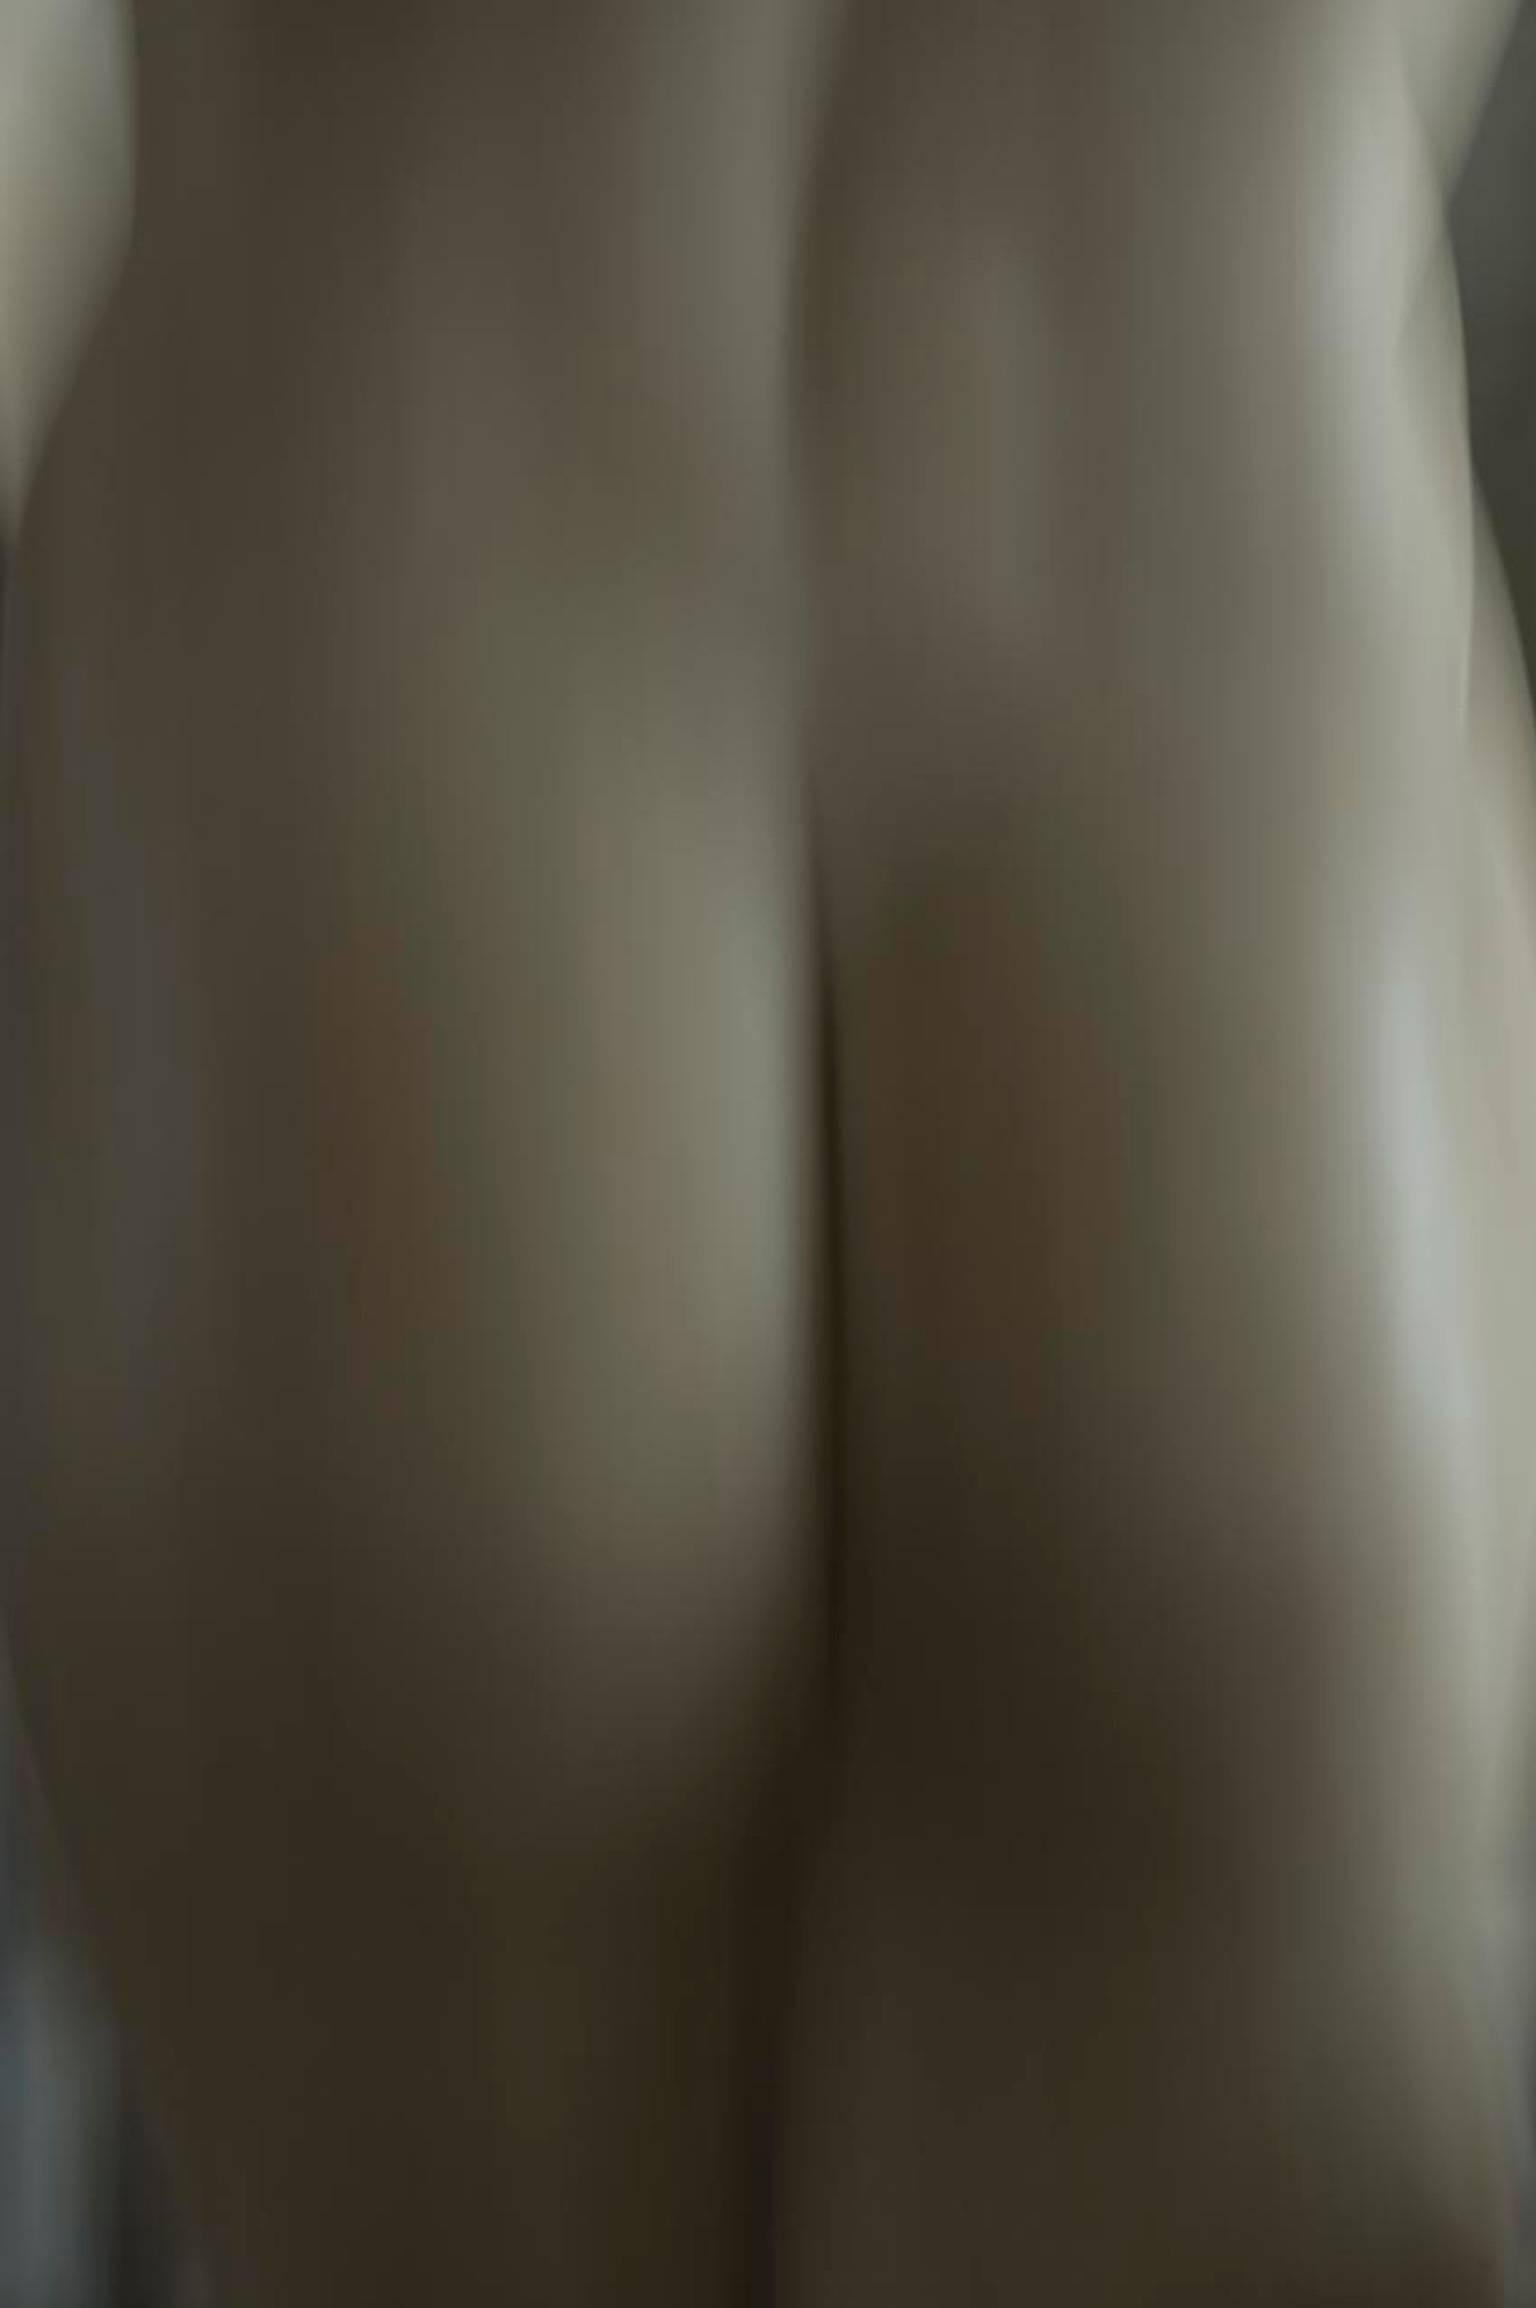 Luca Artioli Color Photograph - Roman Statue Study 02. Nude. Limited edition color photograph